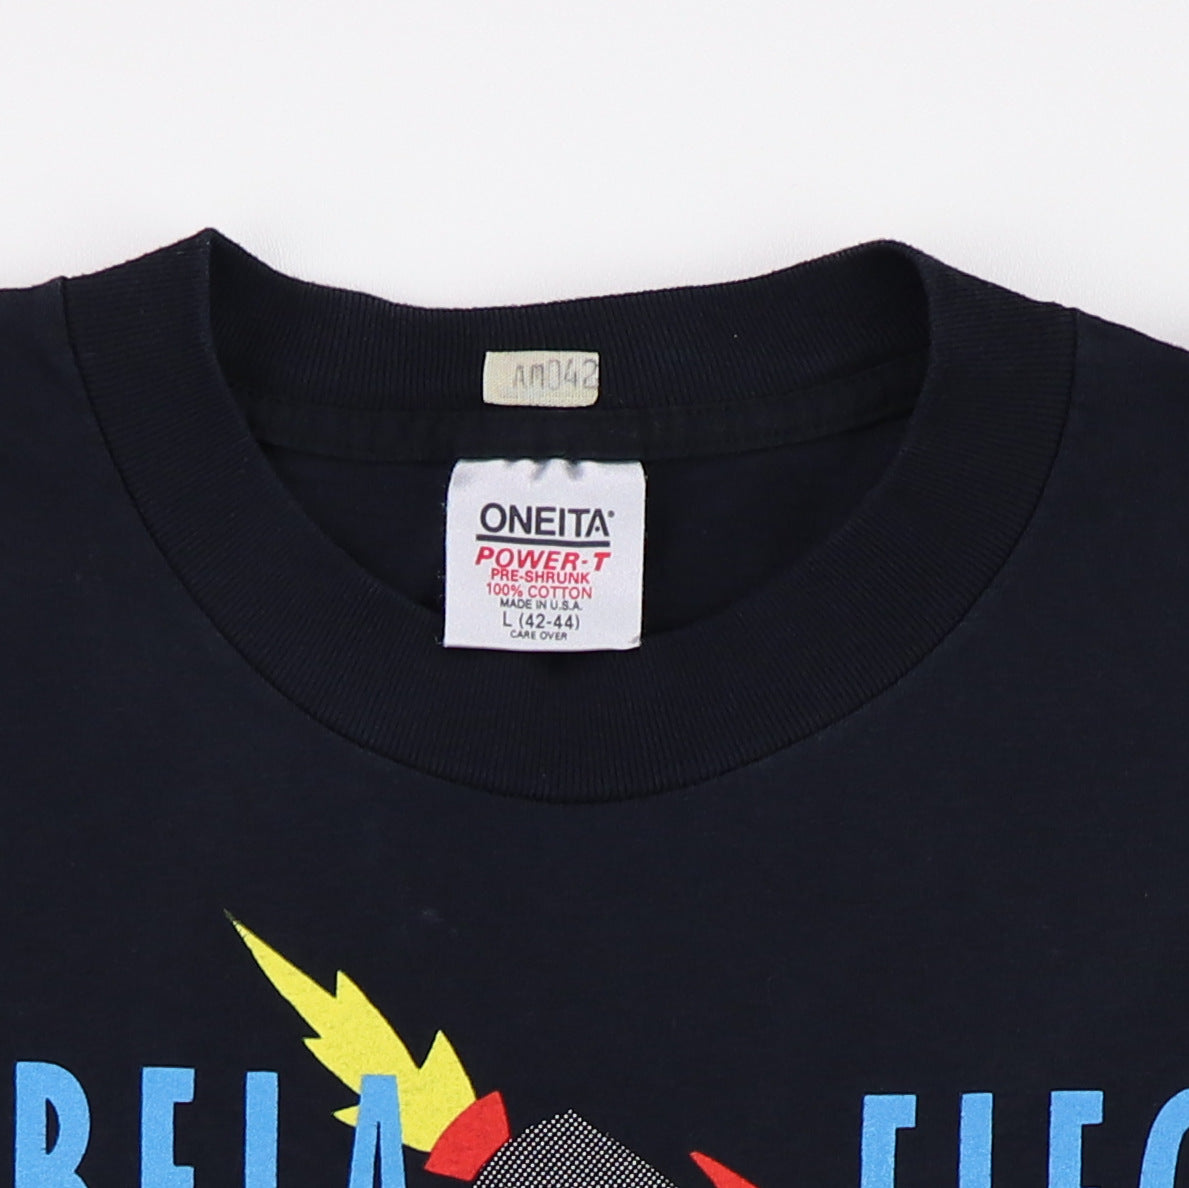 1990 Bela Fleck And The Flecktones Shirt